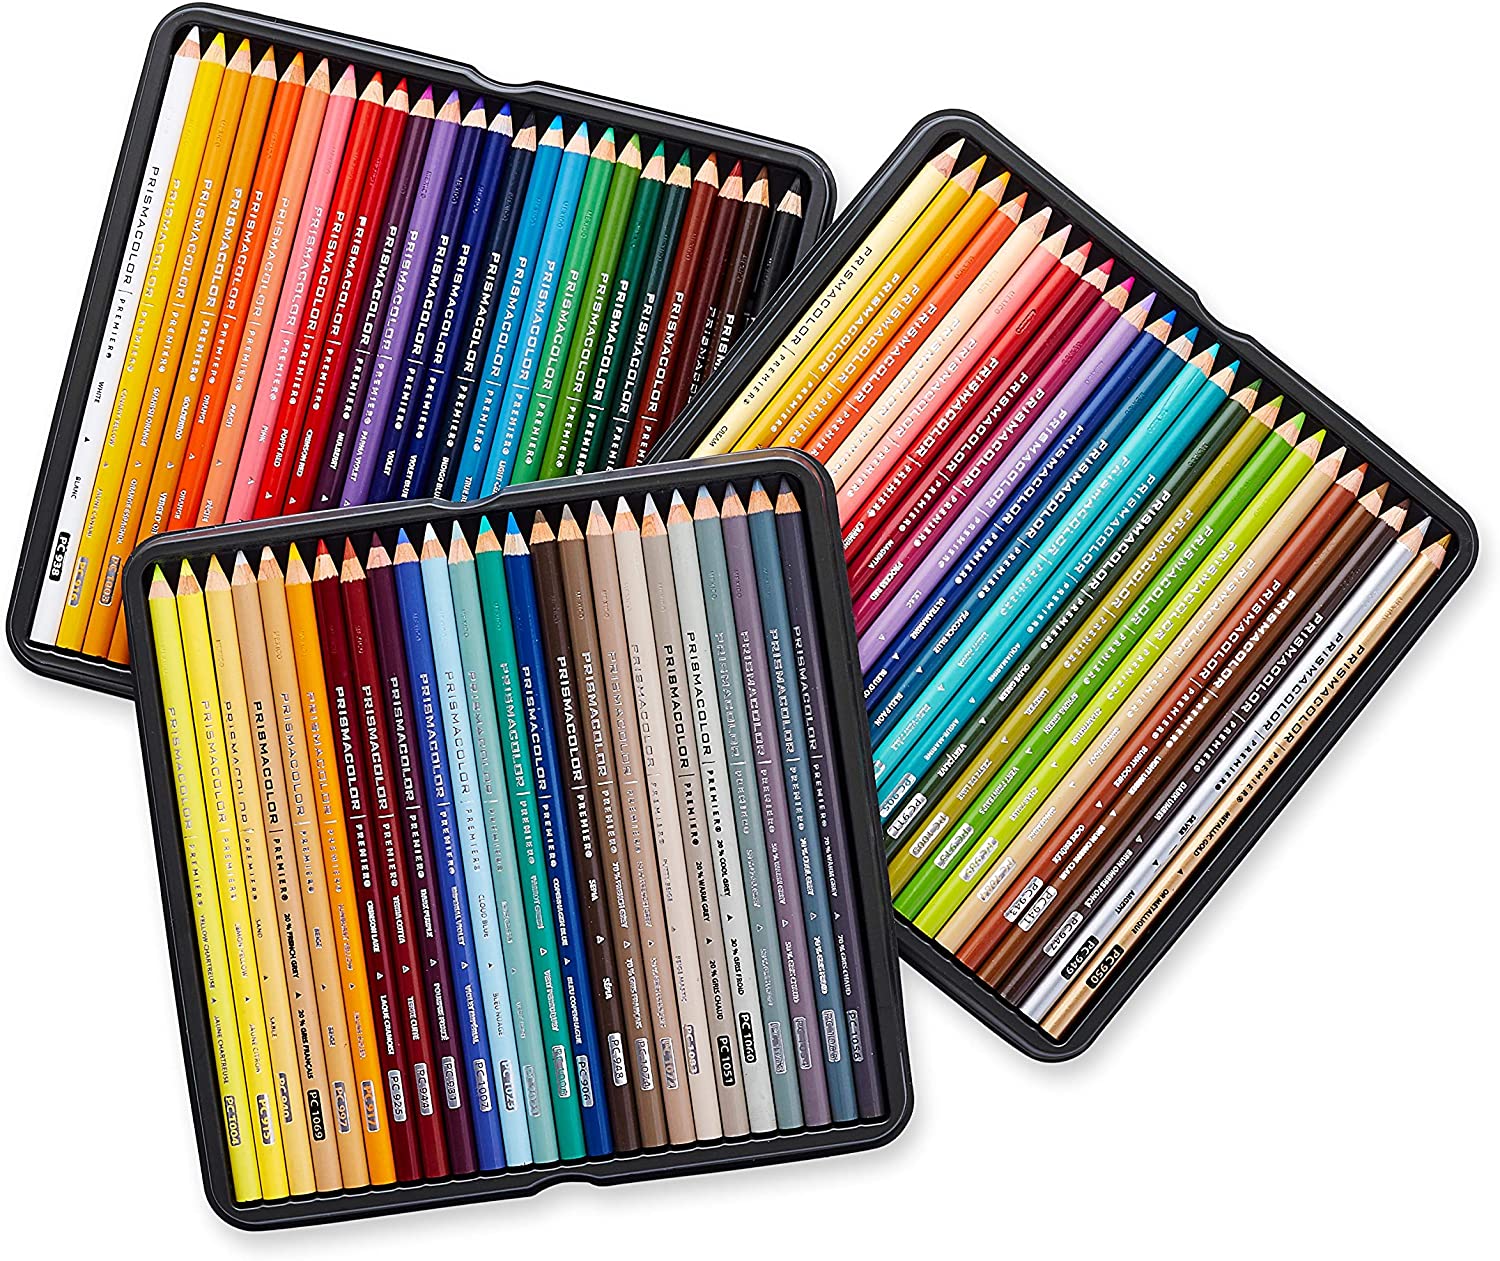 https://sarahrenaeclark.com/wp-content/uploads/2020/12/prismacolor-colored-pencils.jpg